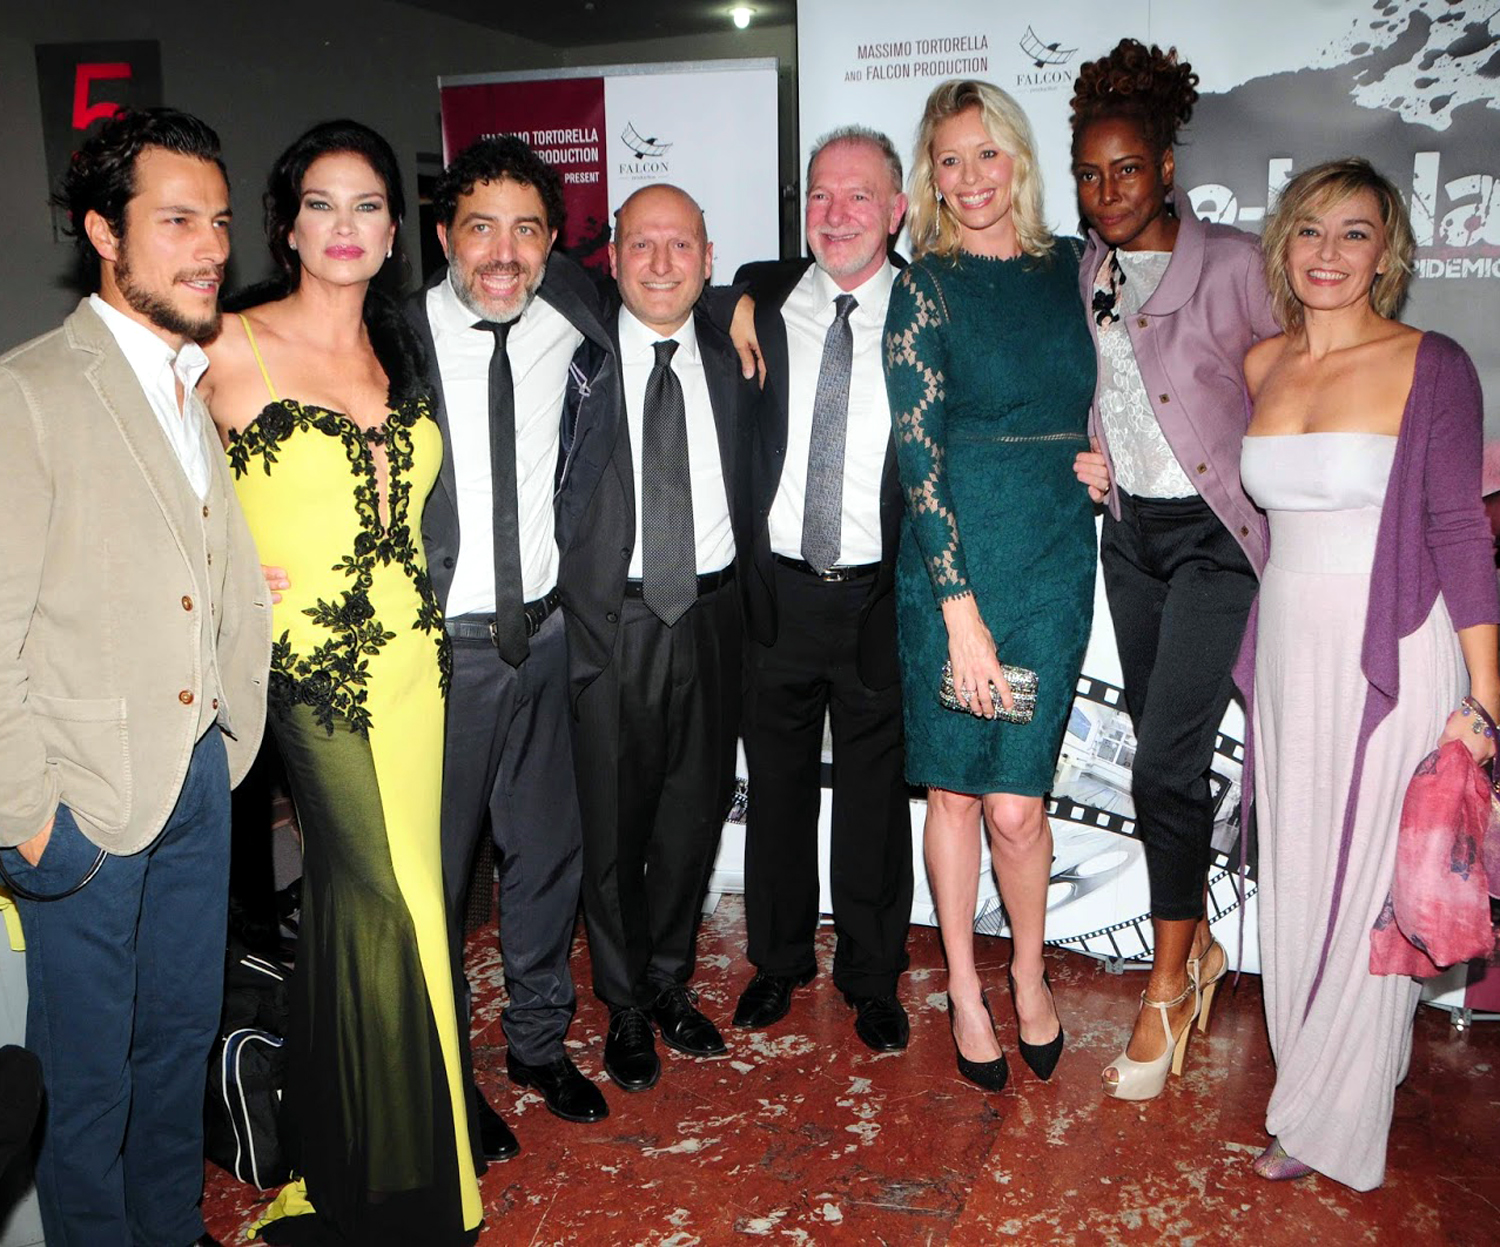 With cast and director Christian Marriziti, my agent Andrea Quattrini and the preimiere of E-bola the Movie in Rome.